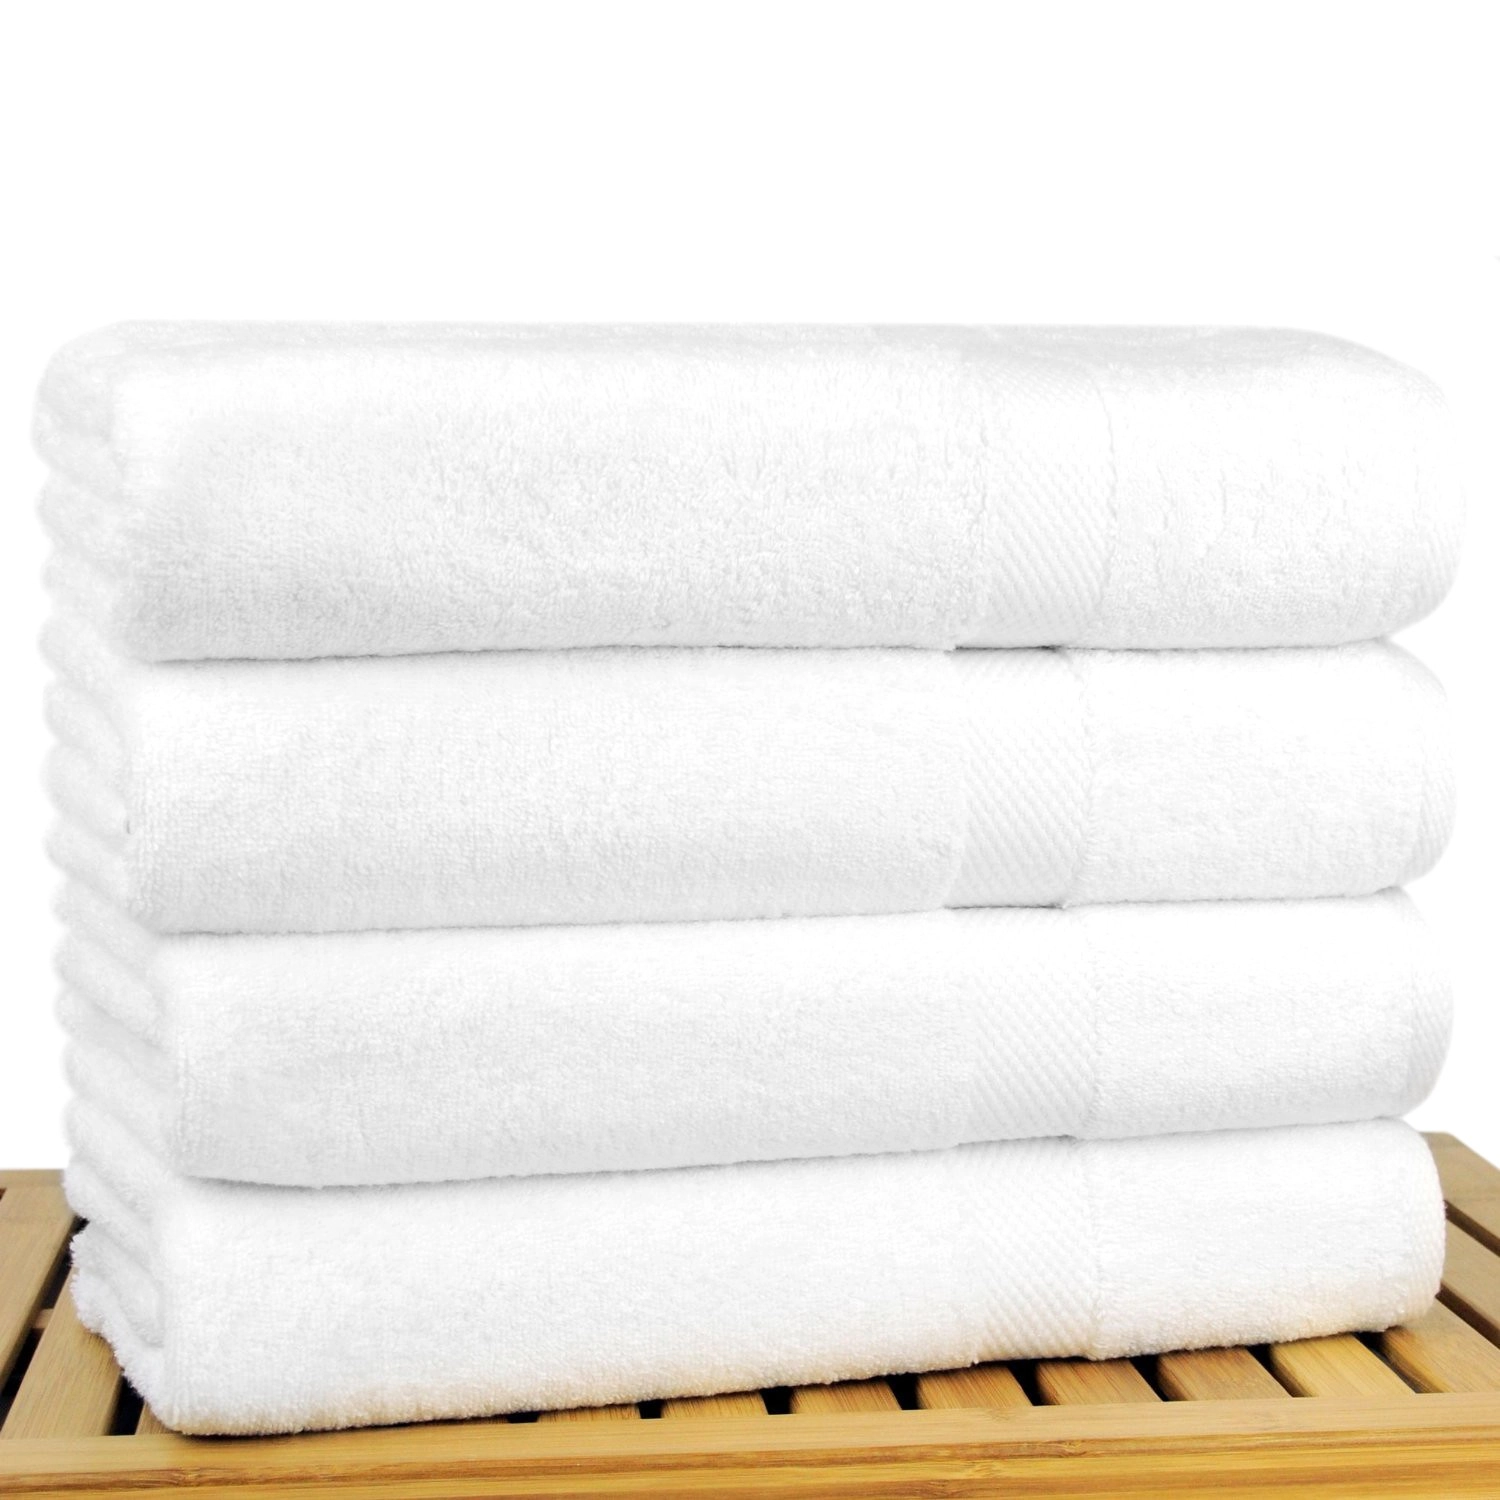 Standard Textile Pool Towel 30 x 60 inch White Reusable - 40430100 - Dozen / 12